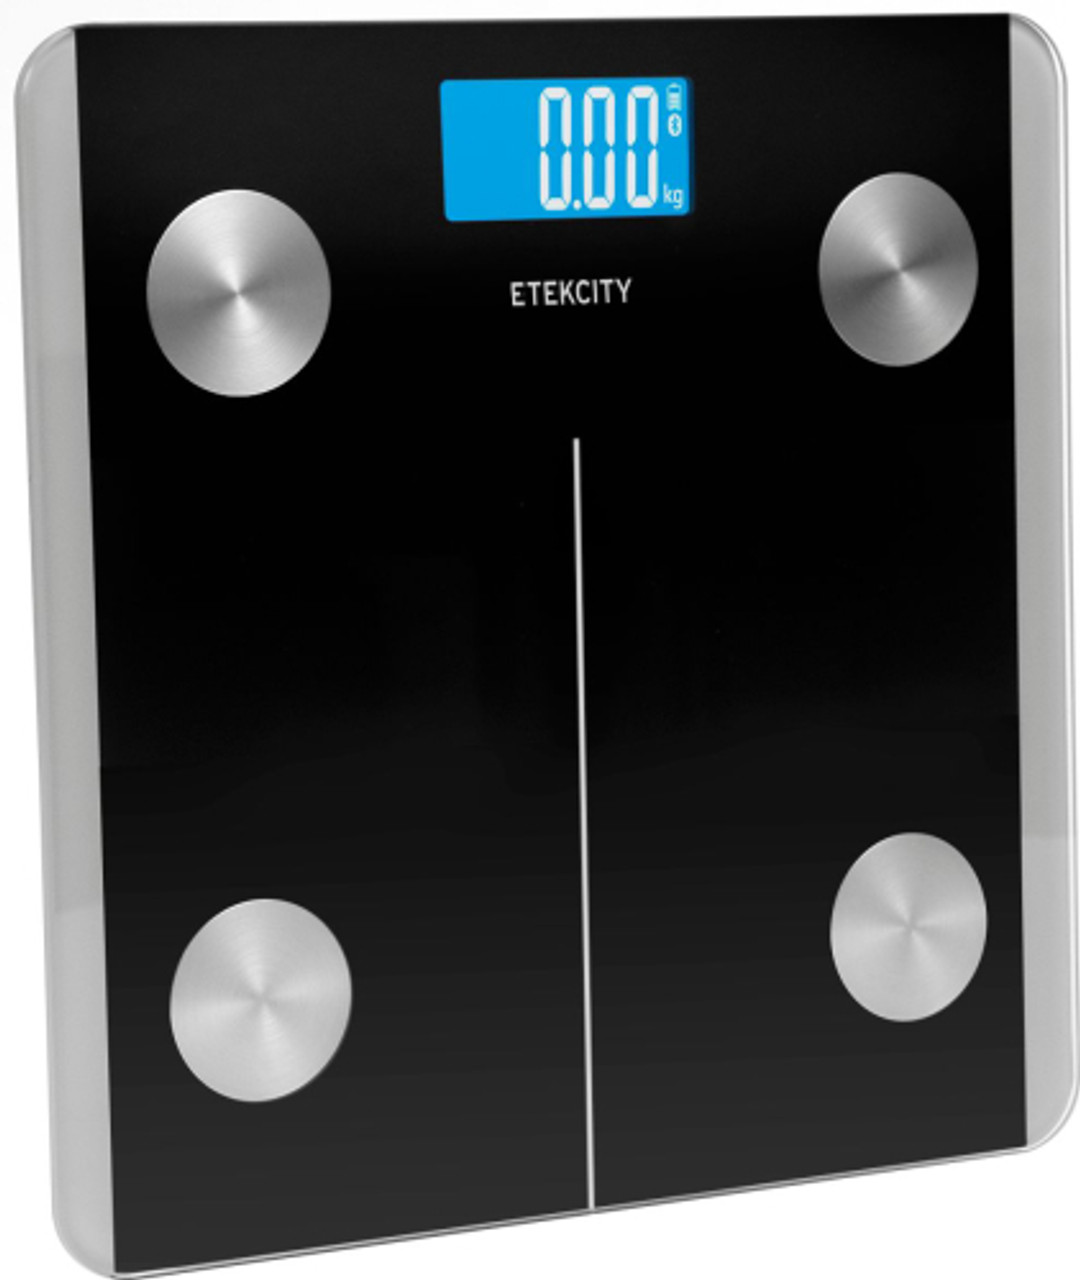 Etekcity Smart Fitness Scale - Black